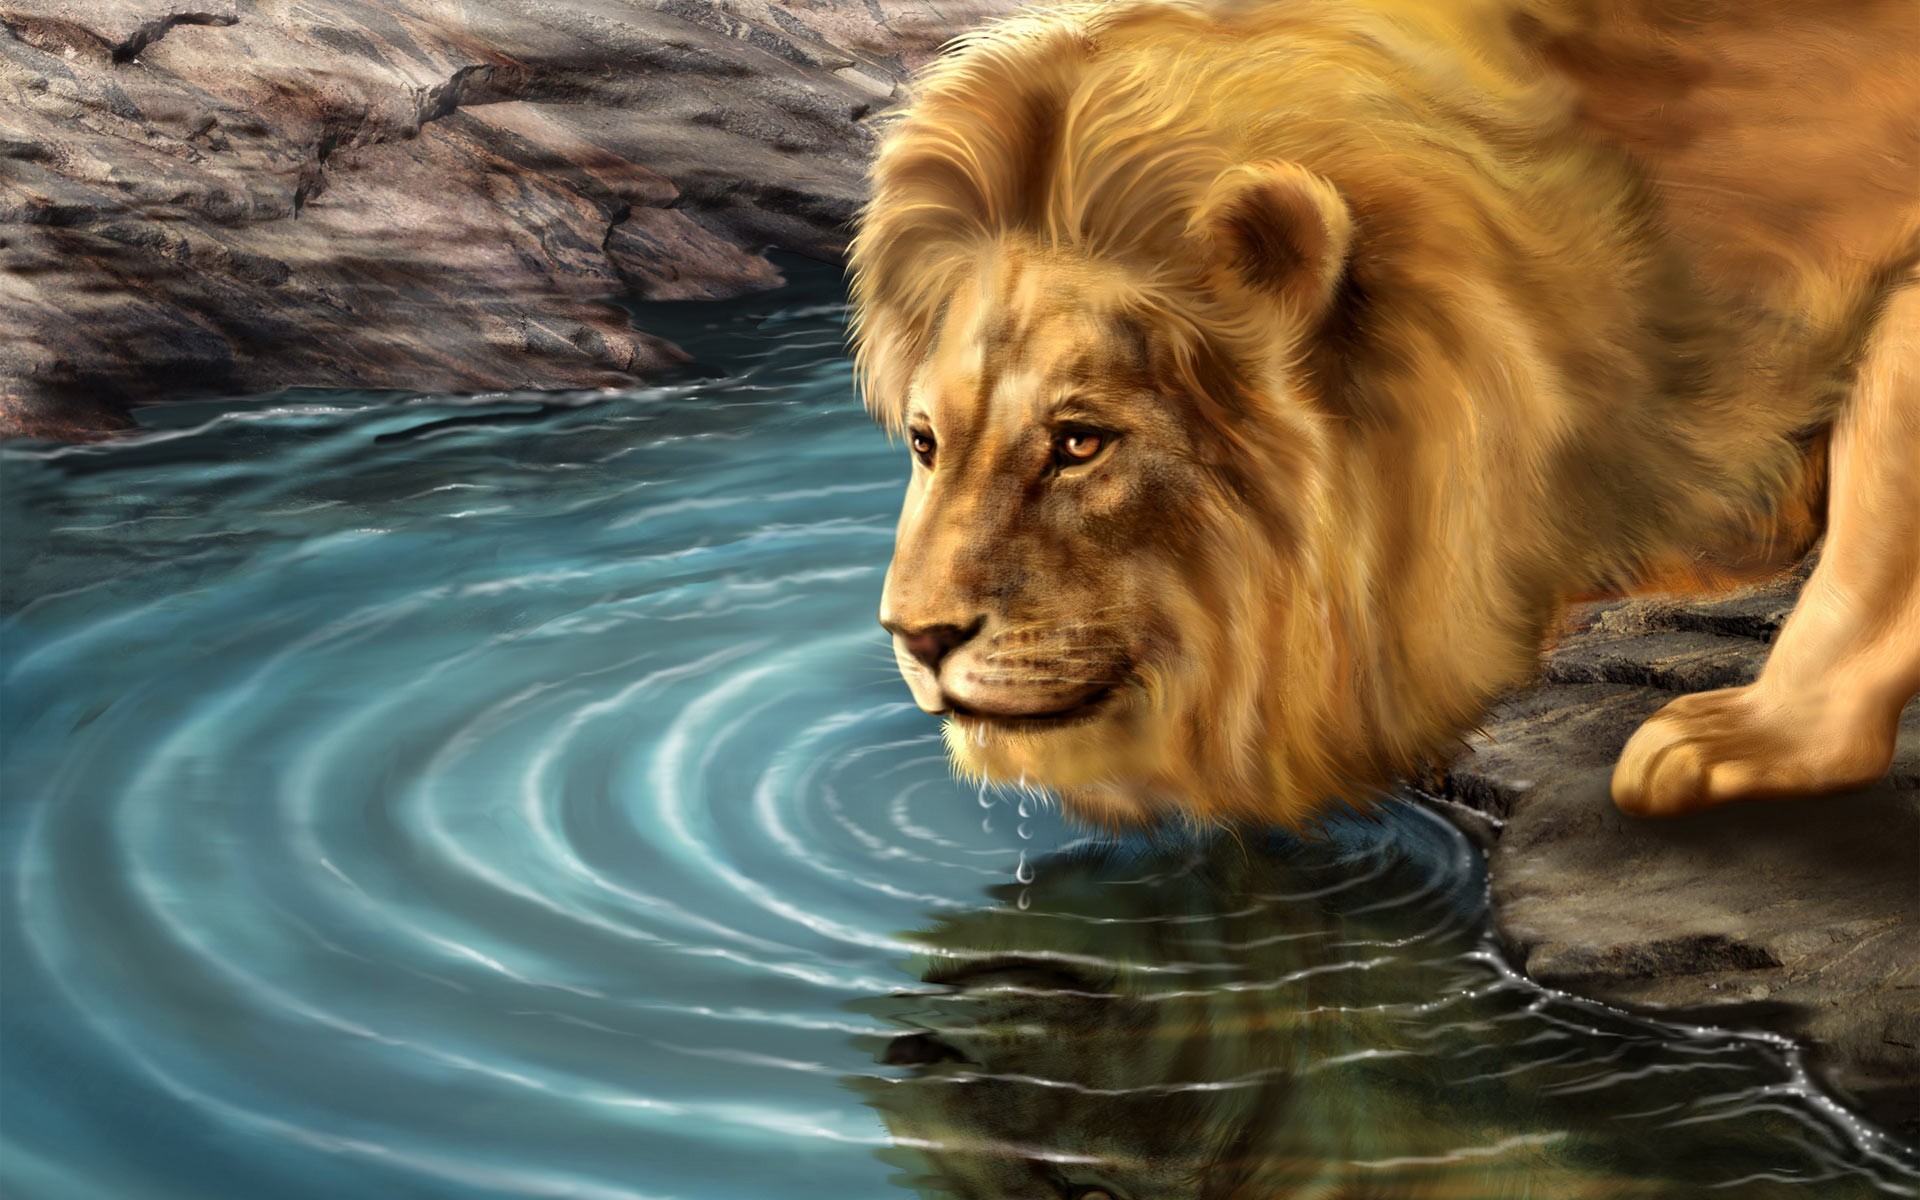 1920x1200 Lion lion water drinking hd wallpapers.jpg Ã¢€“ World HD Wallpapers